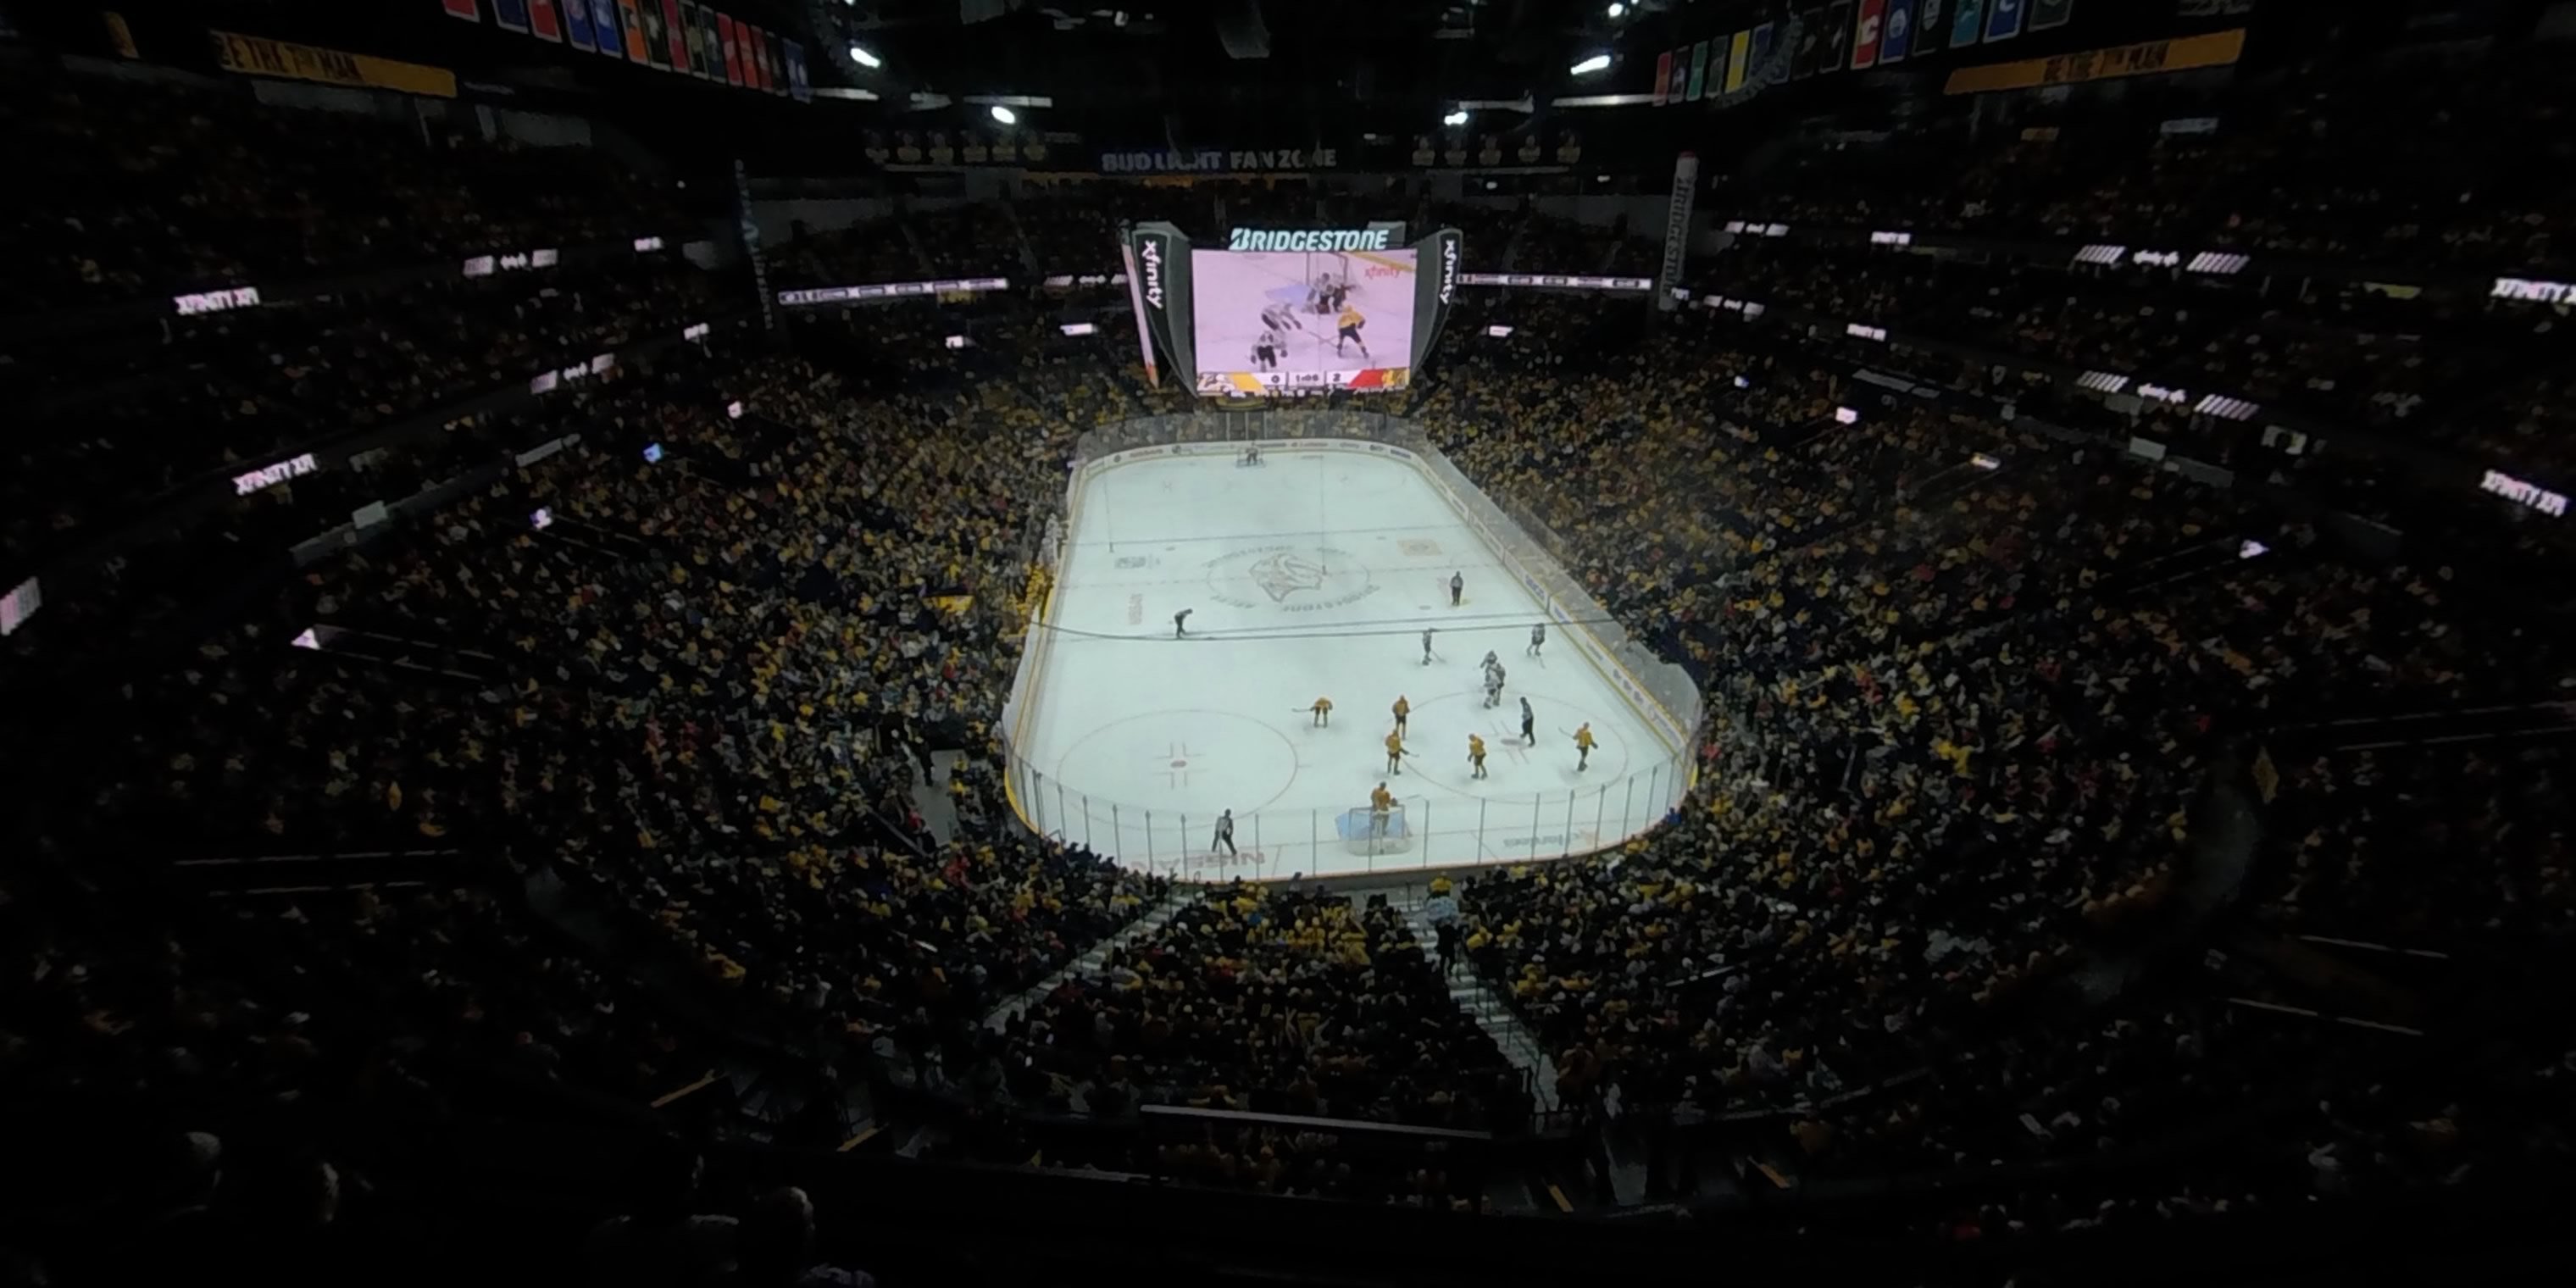 section 301 panoramic seat view  for hockey - bridgestone arena